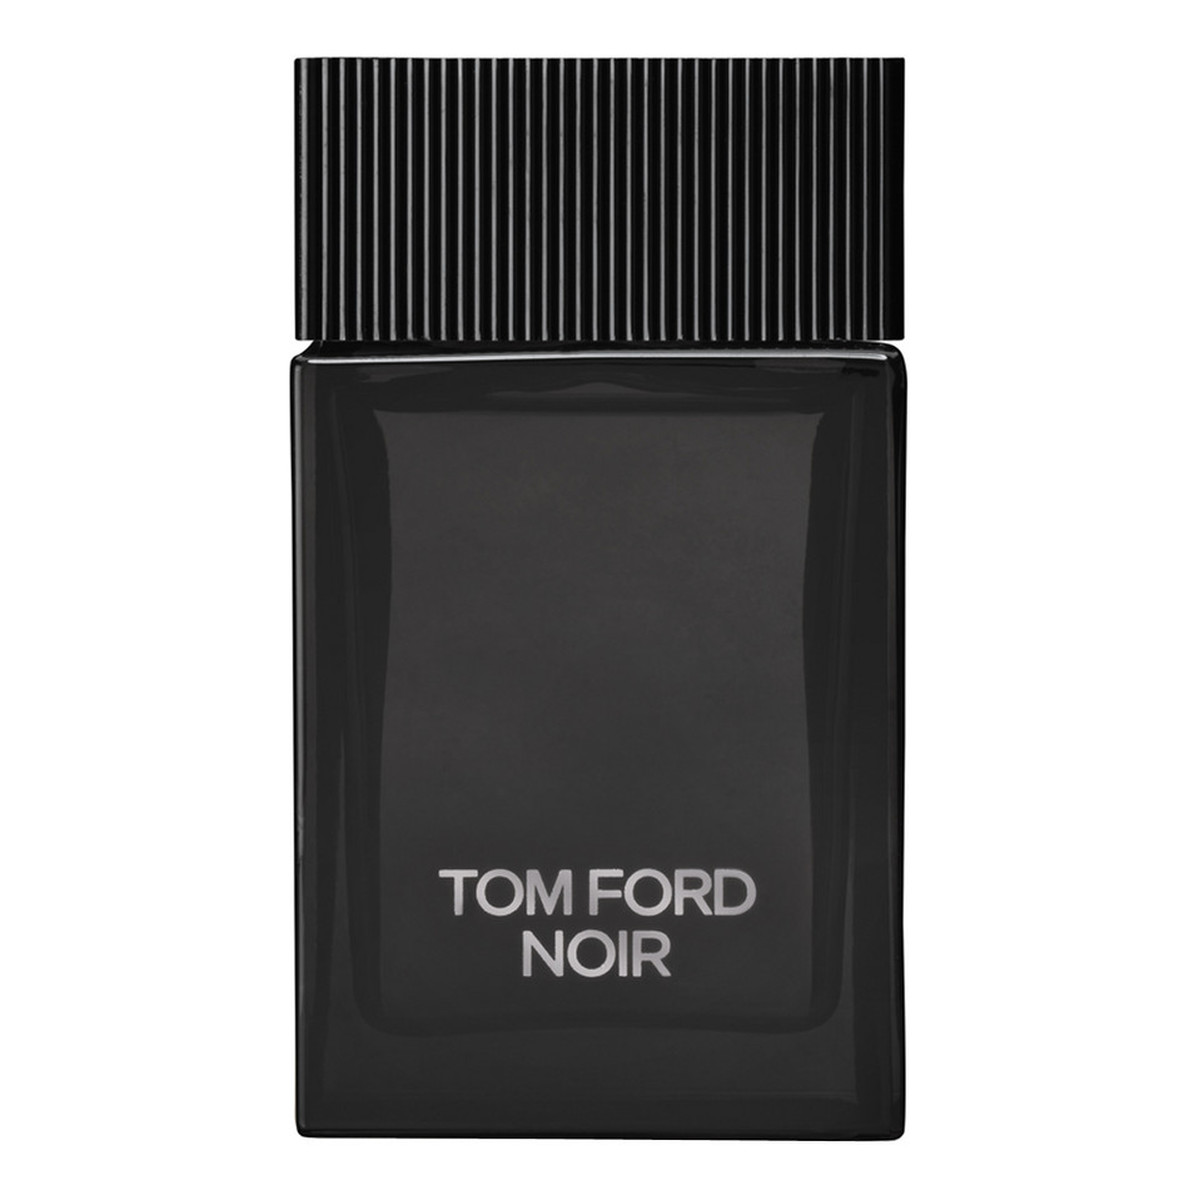 Tom Ford Noir woda perfumowana 100ml